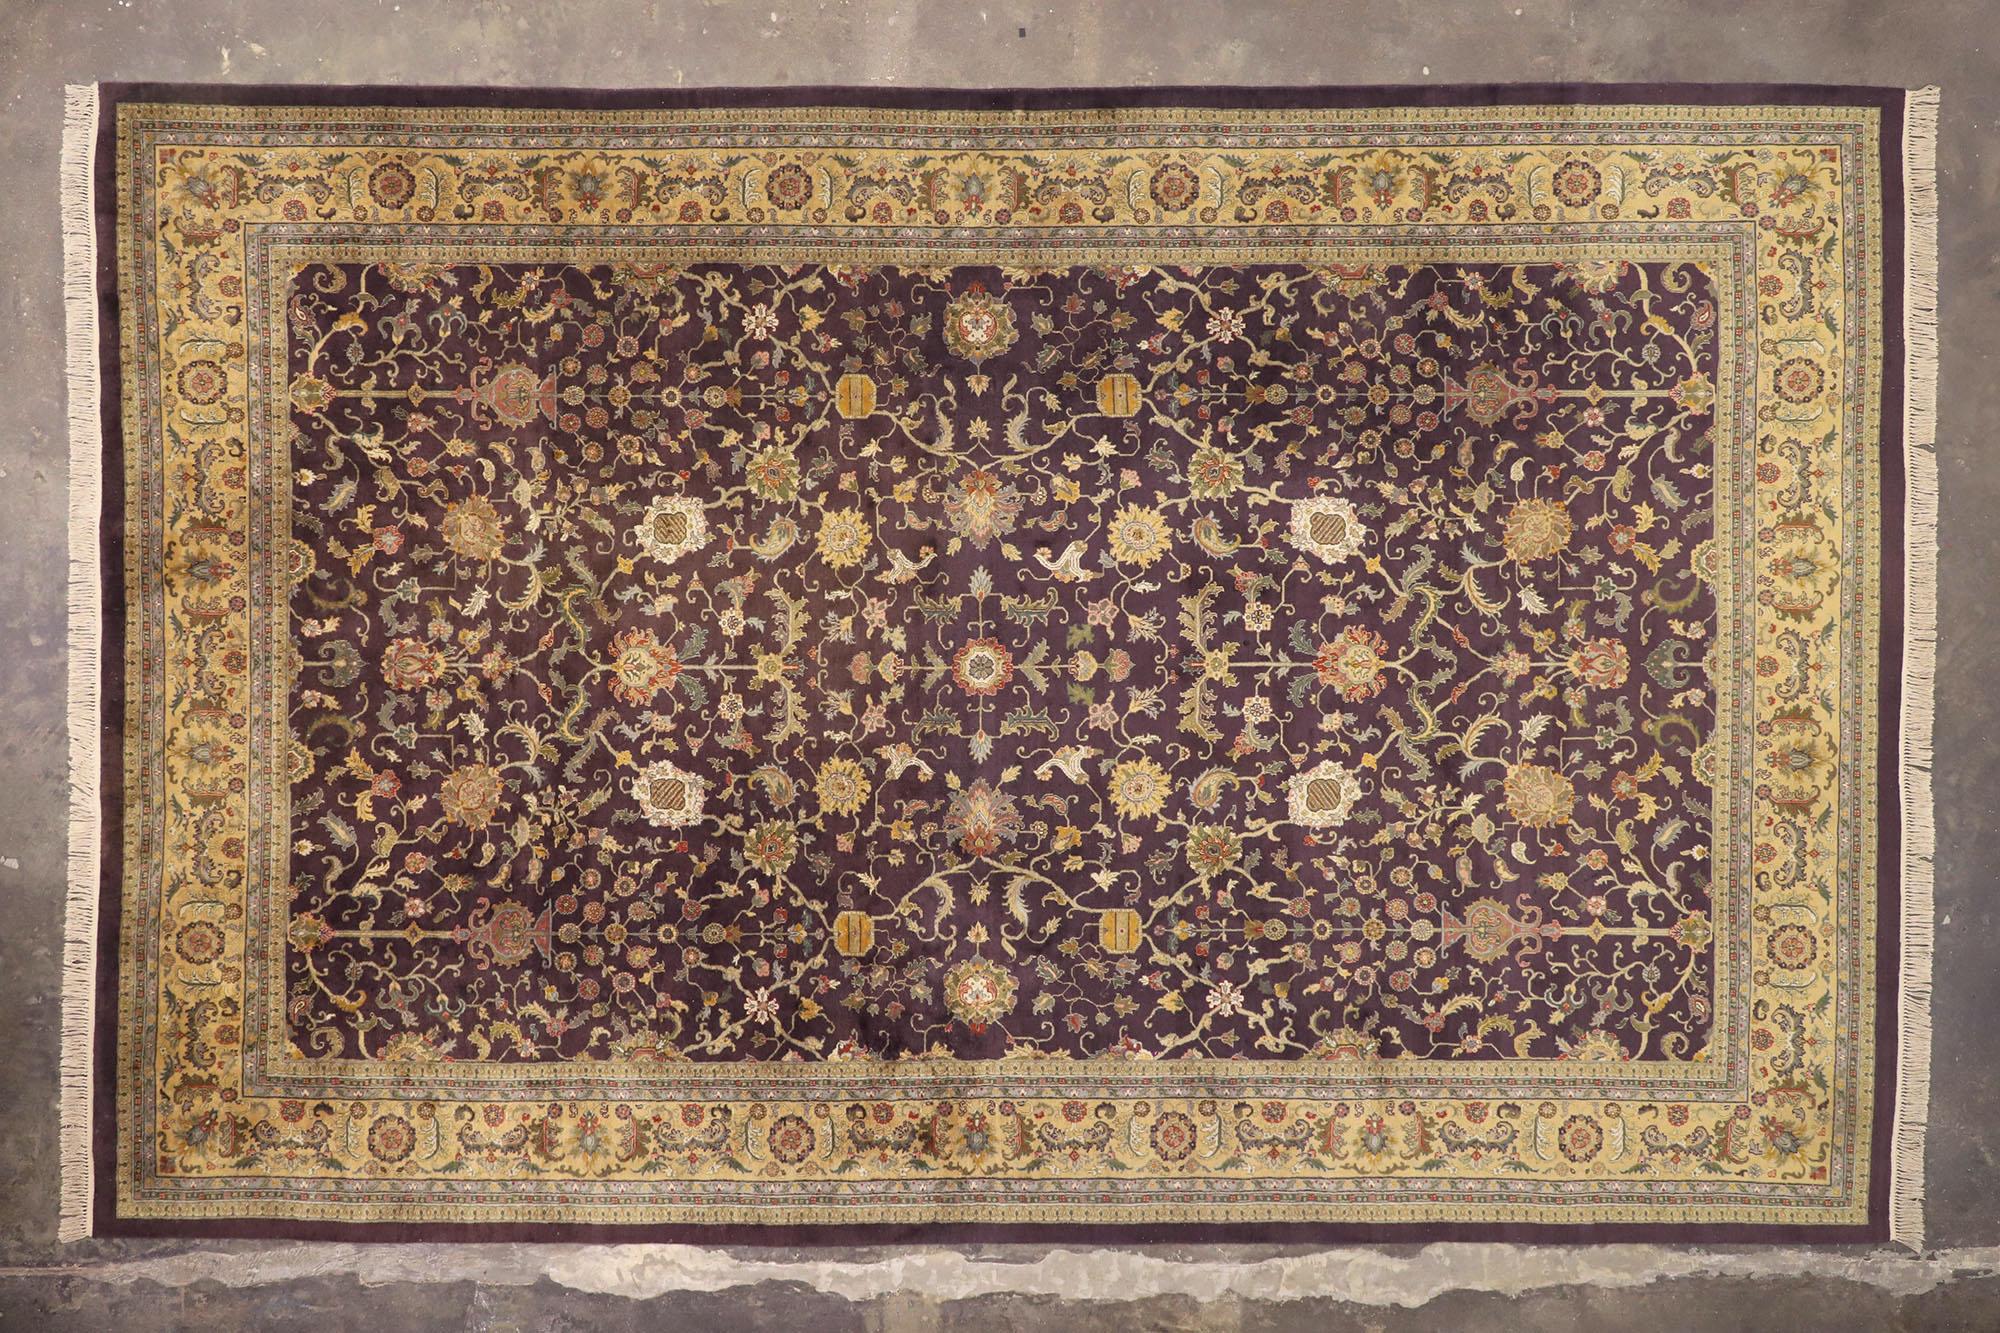 Vintage Aubergine Indian Palatial Carpet, 11'03 x 17'08 For Sale 2